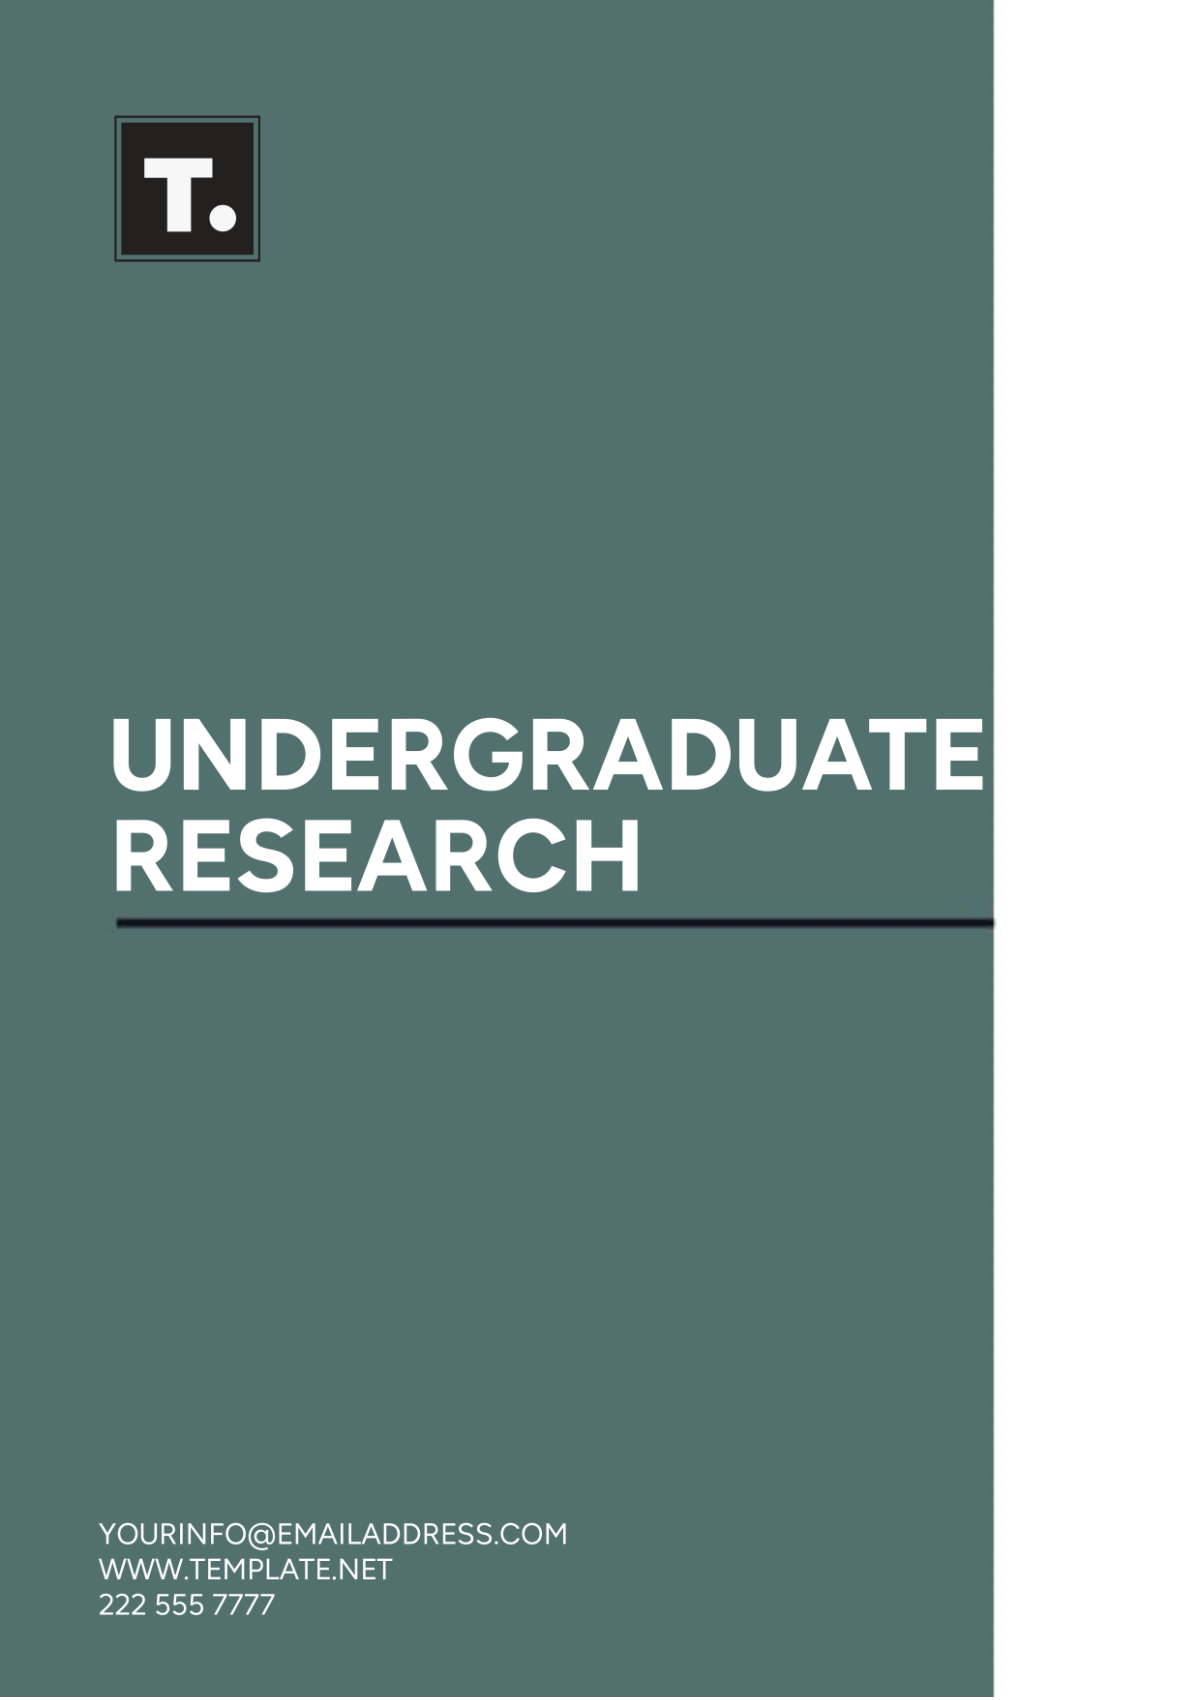 Free Undergraduate Research Template